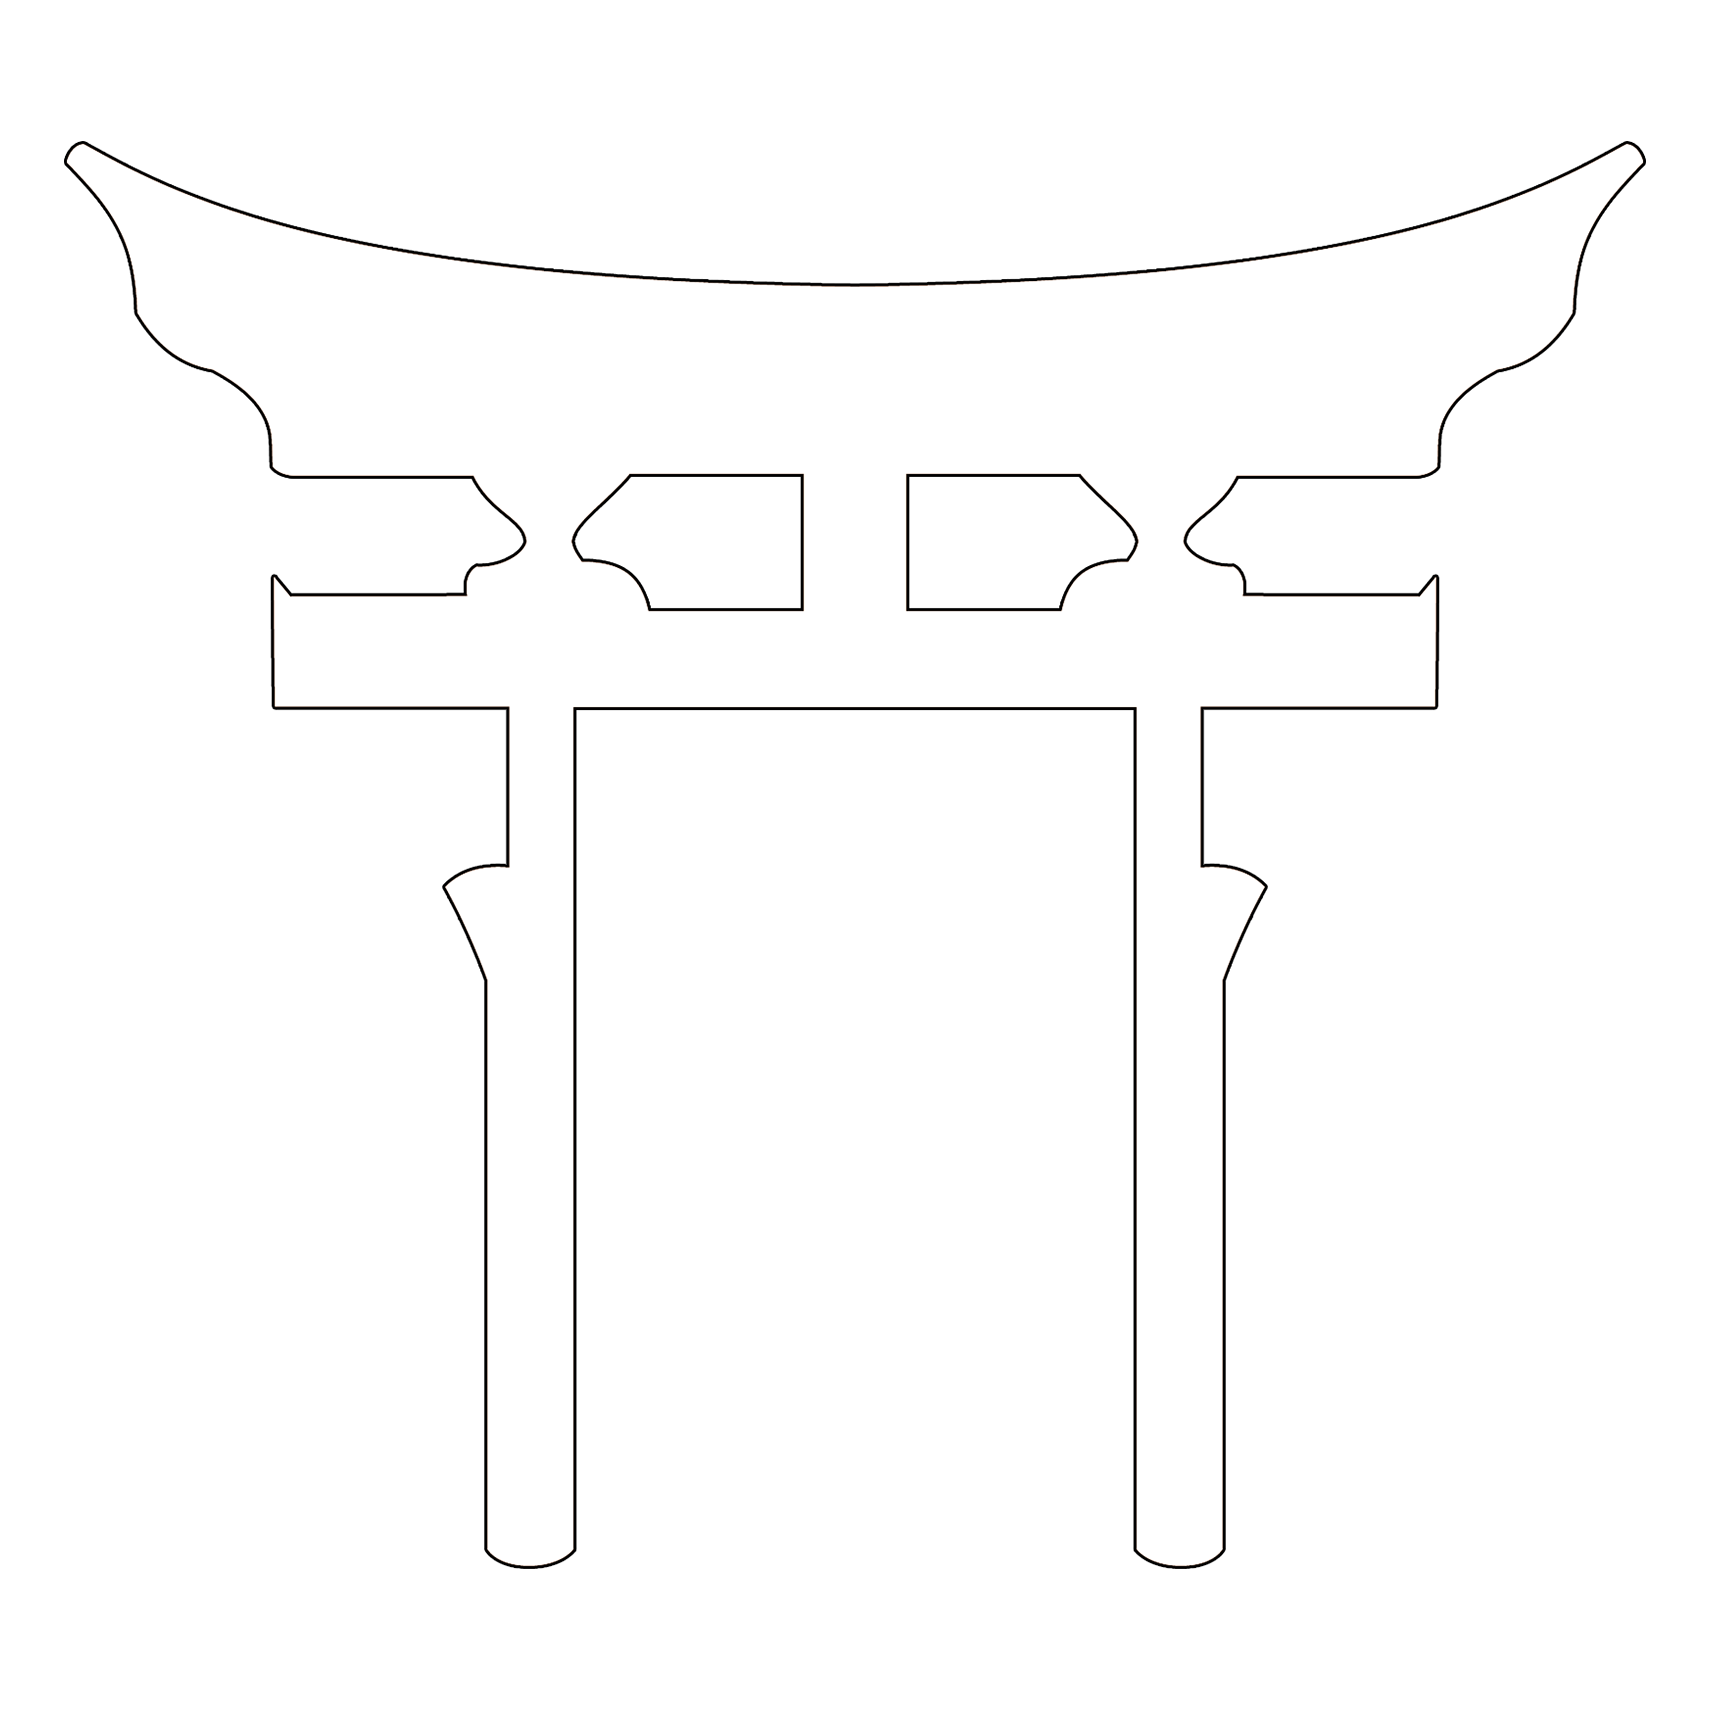 shinto symbol